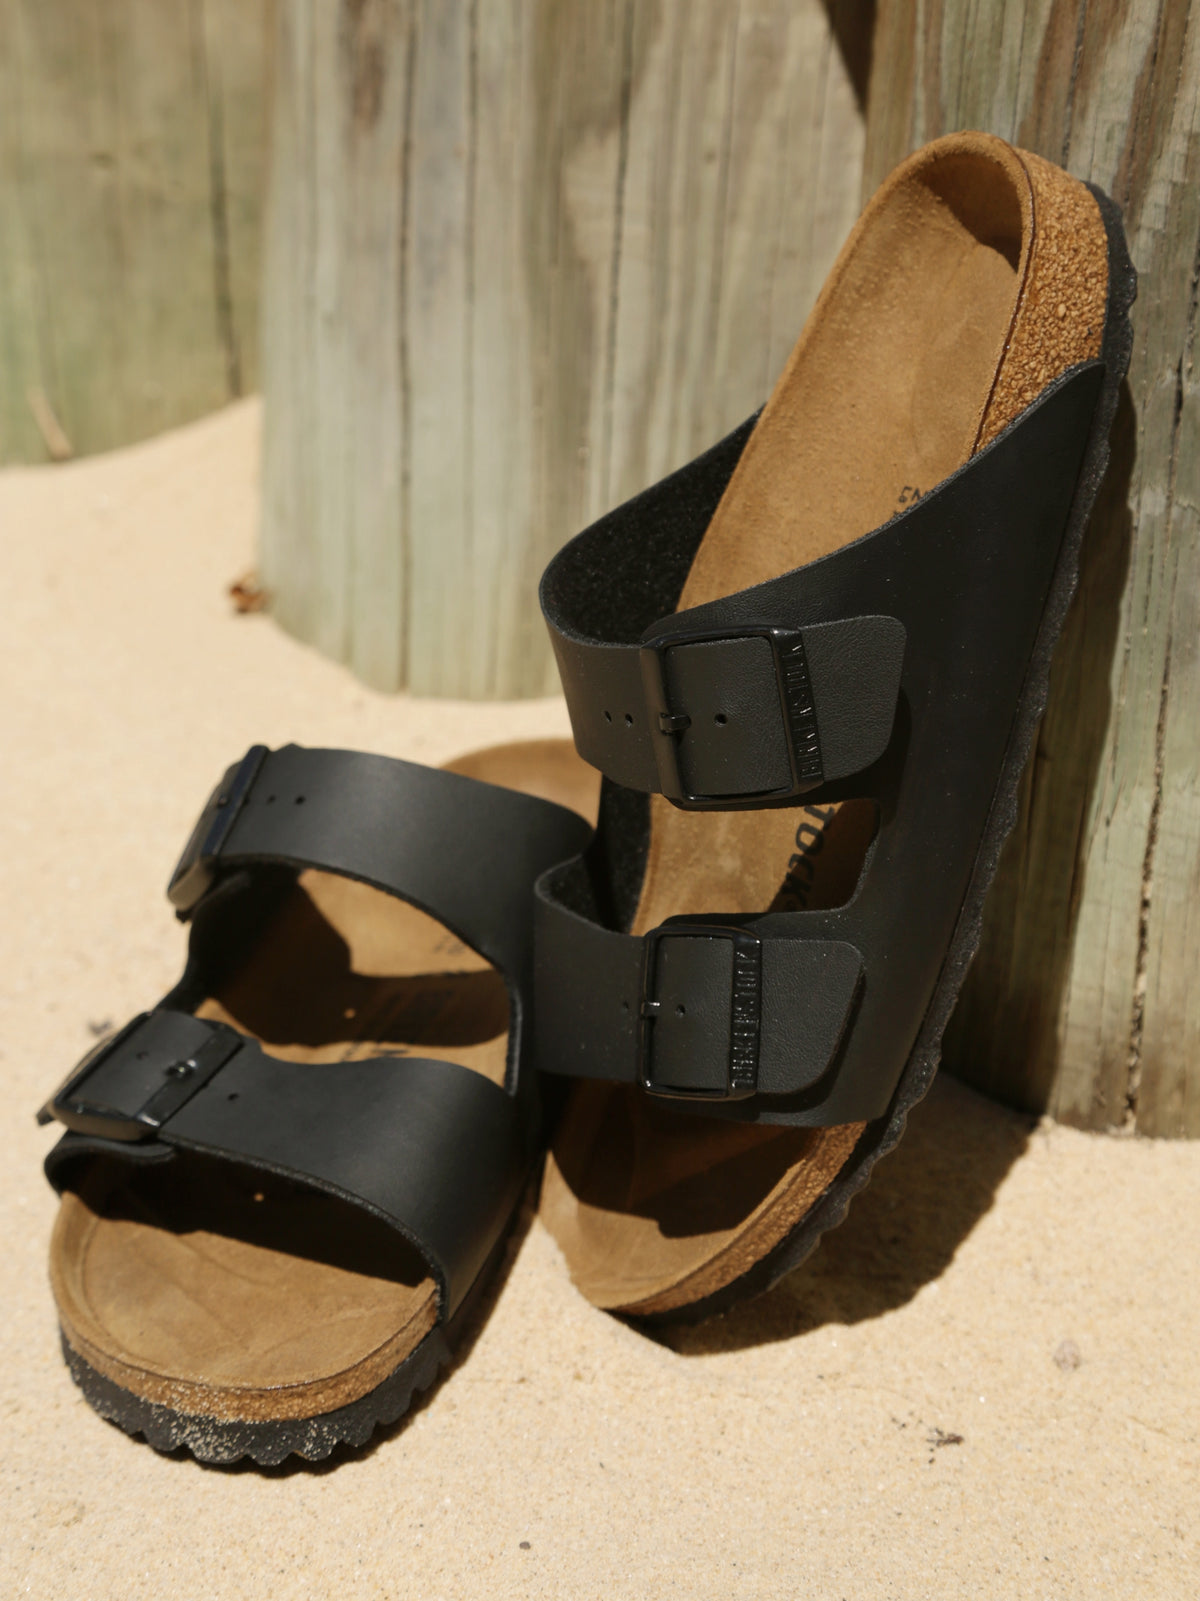 Unisex Arizona Two-Strap Narrow Width Sandals in Black Birko-Flor